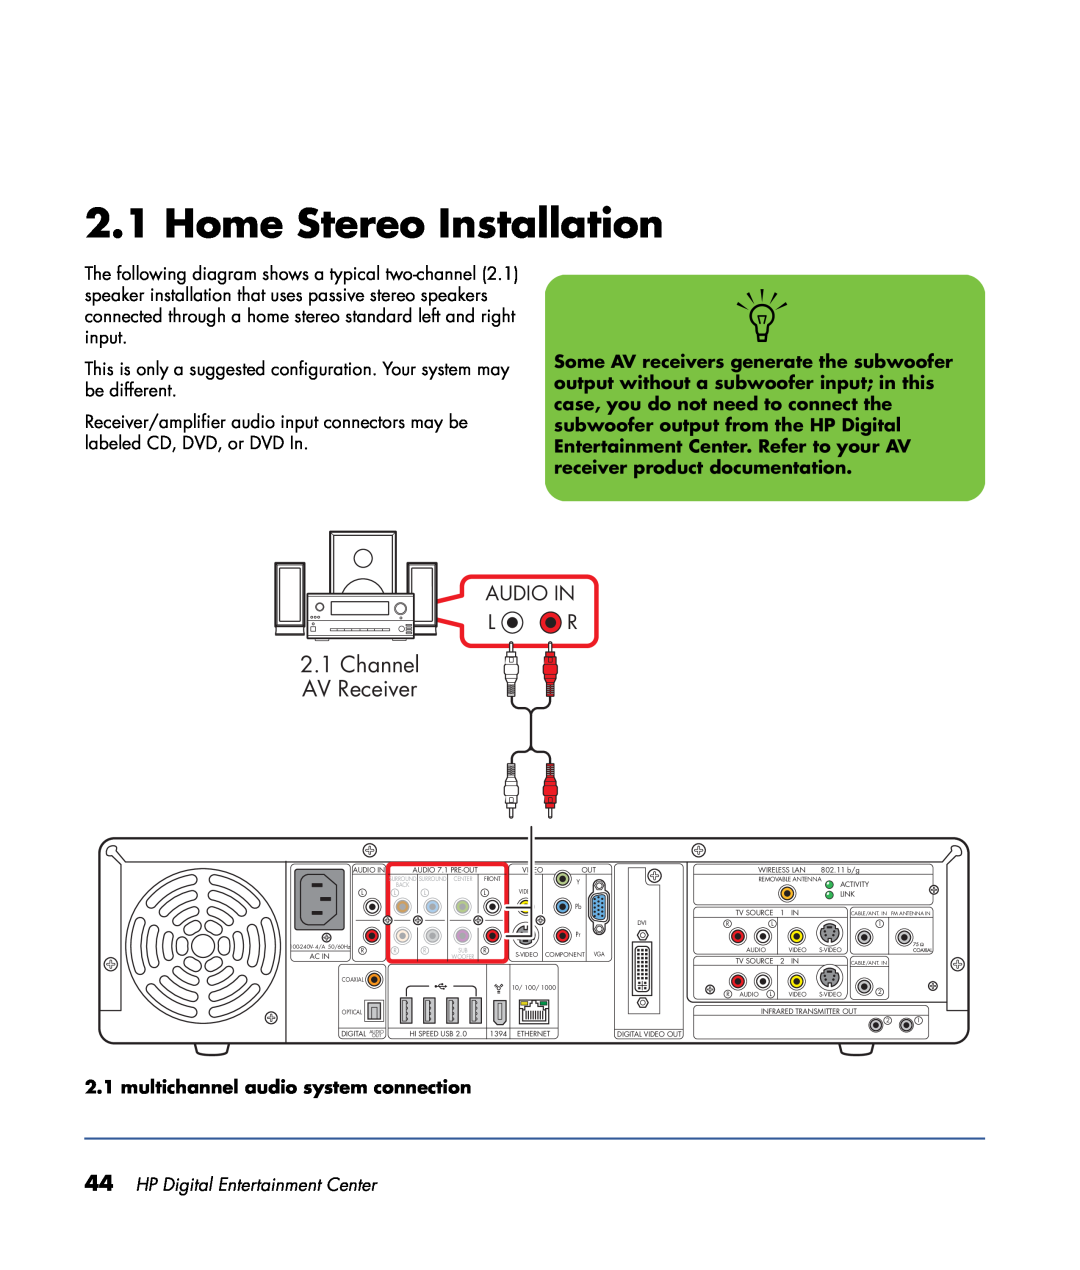 HP z557, z555, z552, z545 Home Stereo Installation, Channel AV Receiver, Audio In L R, multichannel audio system connection 